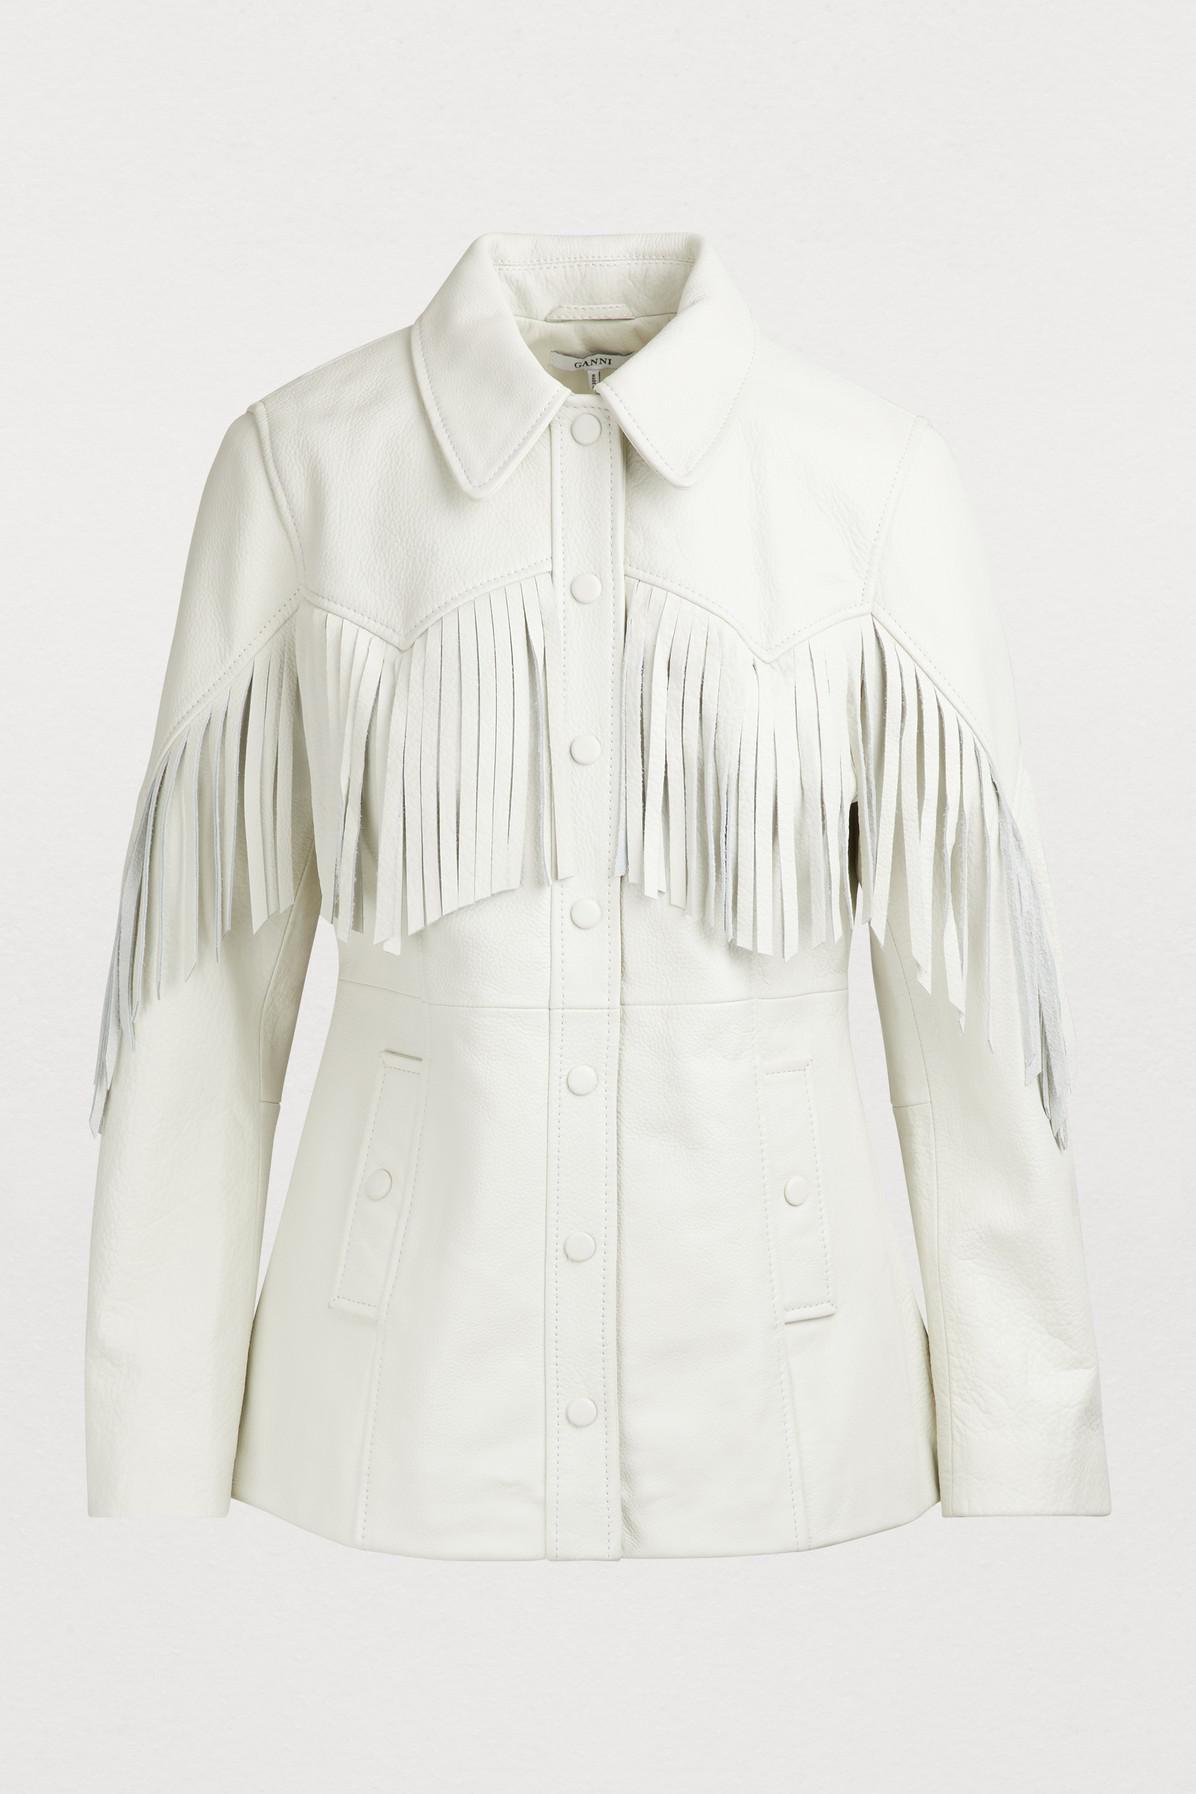 Ganni Angela Leather Jacket in White - Lyst